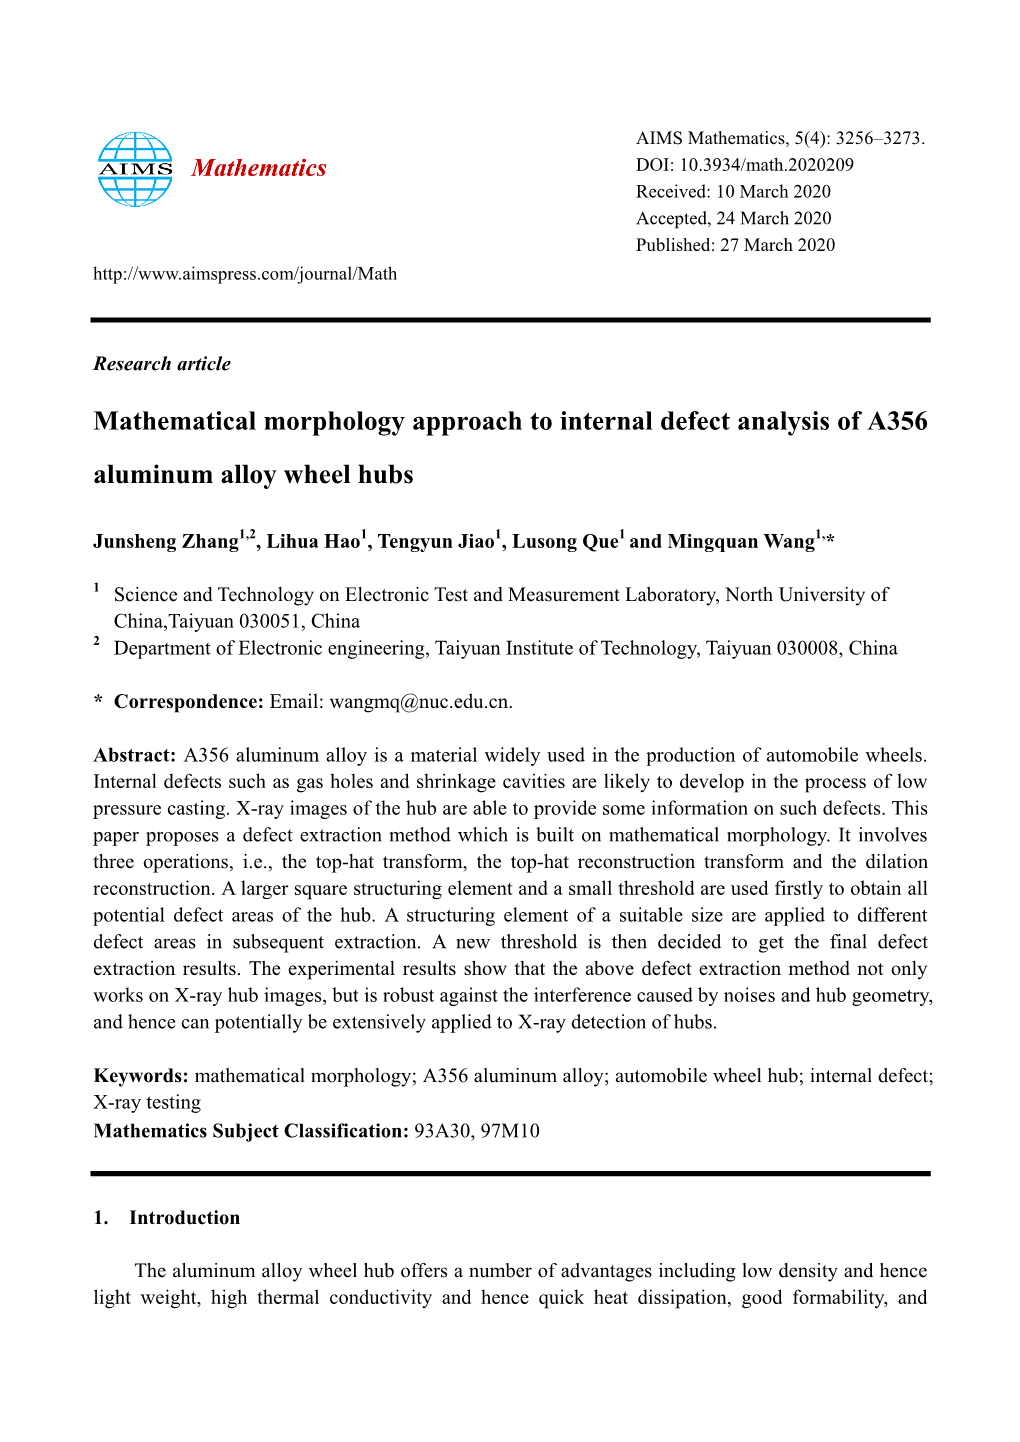 Mathematical Morphology Approach to Internal Defect Analysis of A356 Aluminum Alloy Wheel Hubs